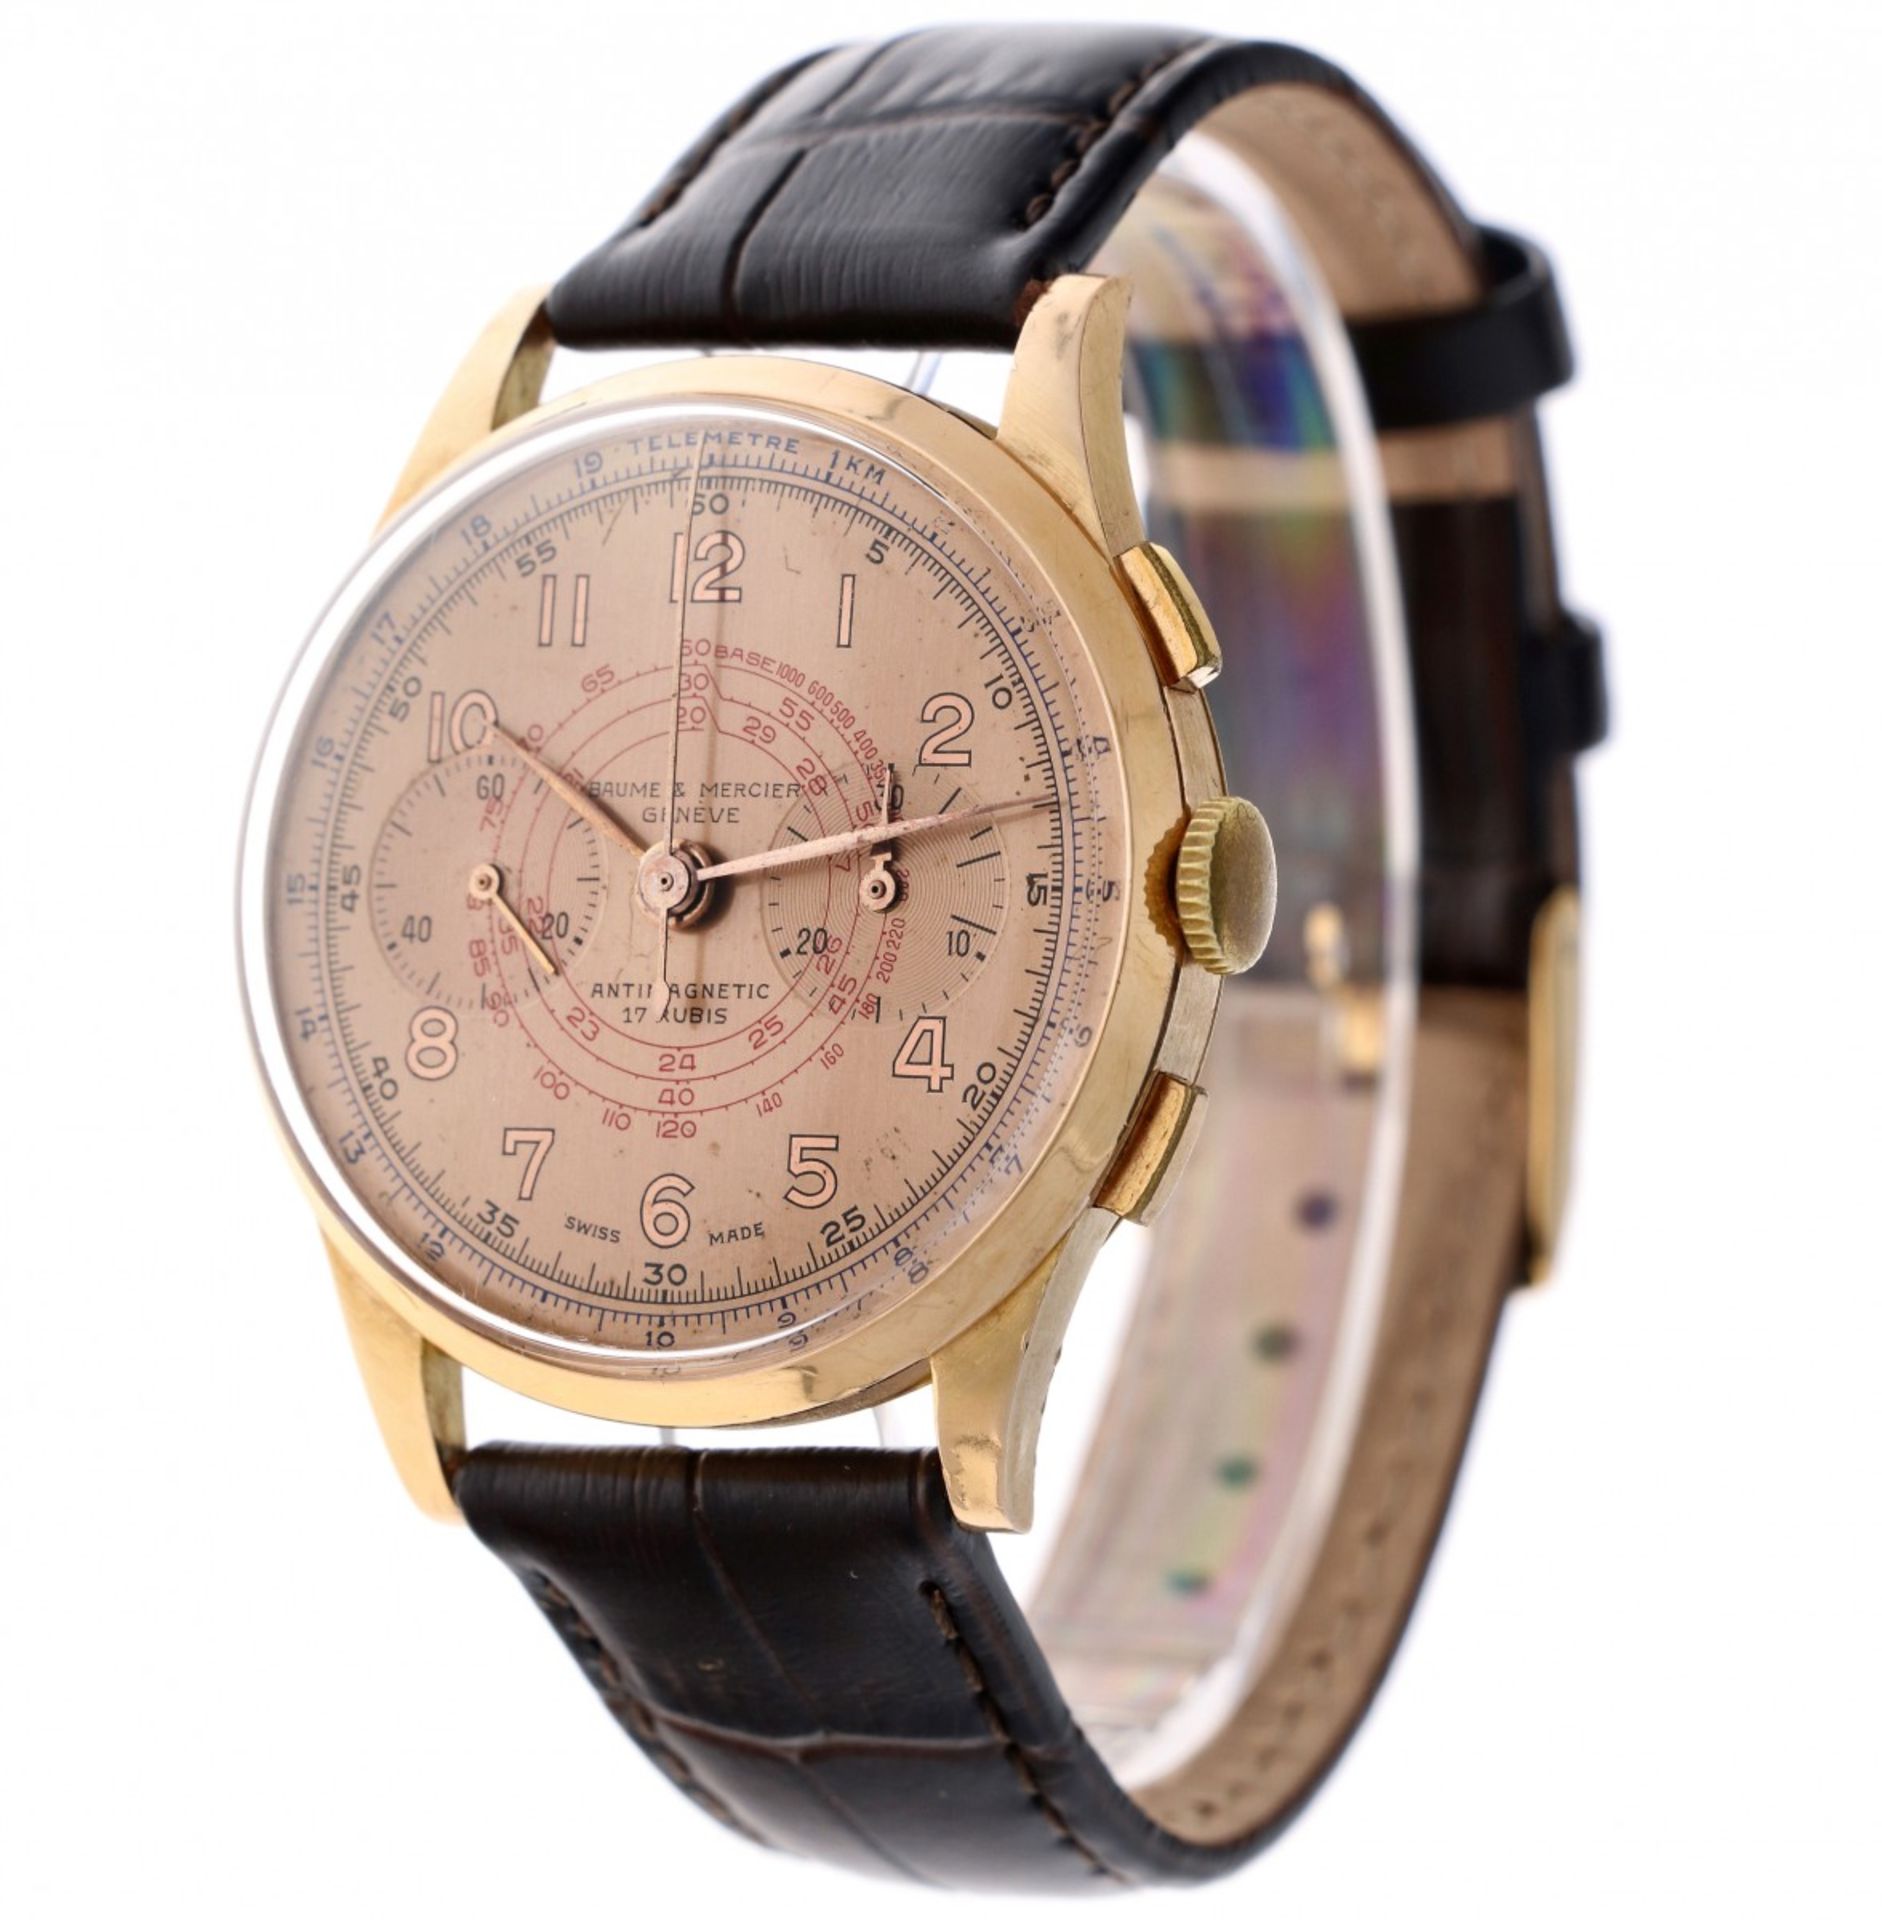 Baume & Mercier Chronograph Rose gold - Men's watch - ca. 1945 - Image 2 of 9